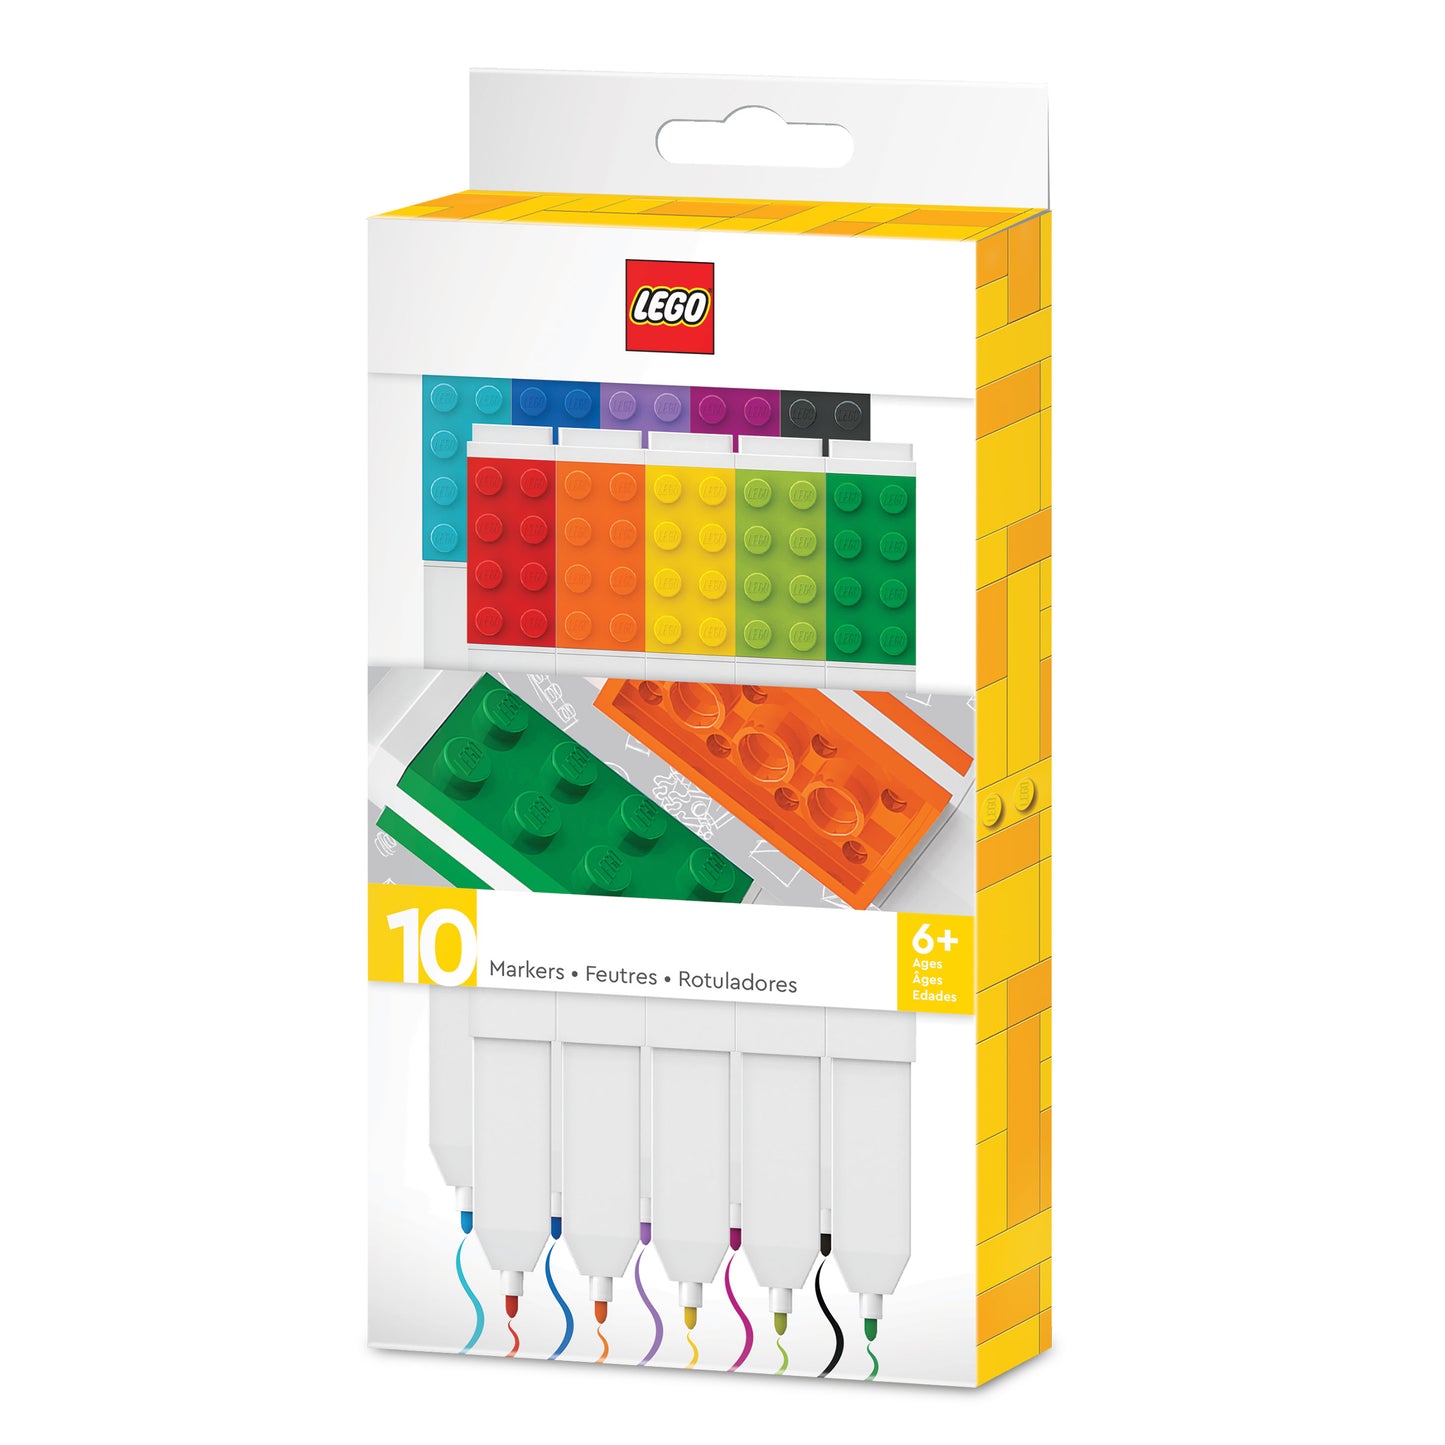 IQ レゴ 2.0シリーズ 文房具 マーカー 12色セット (51644)